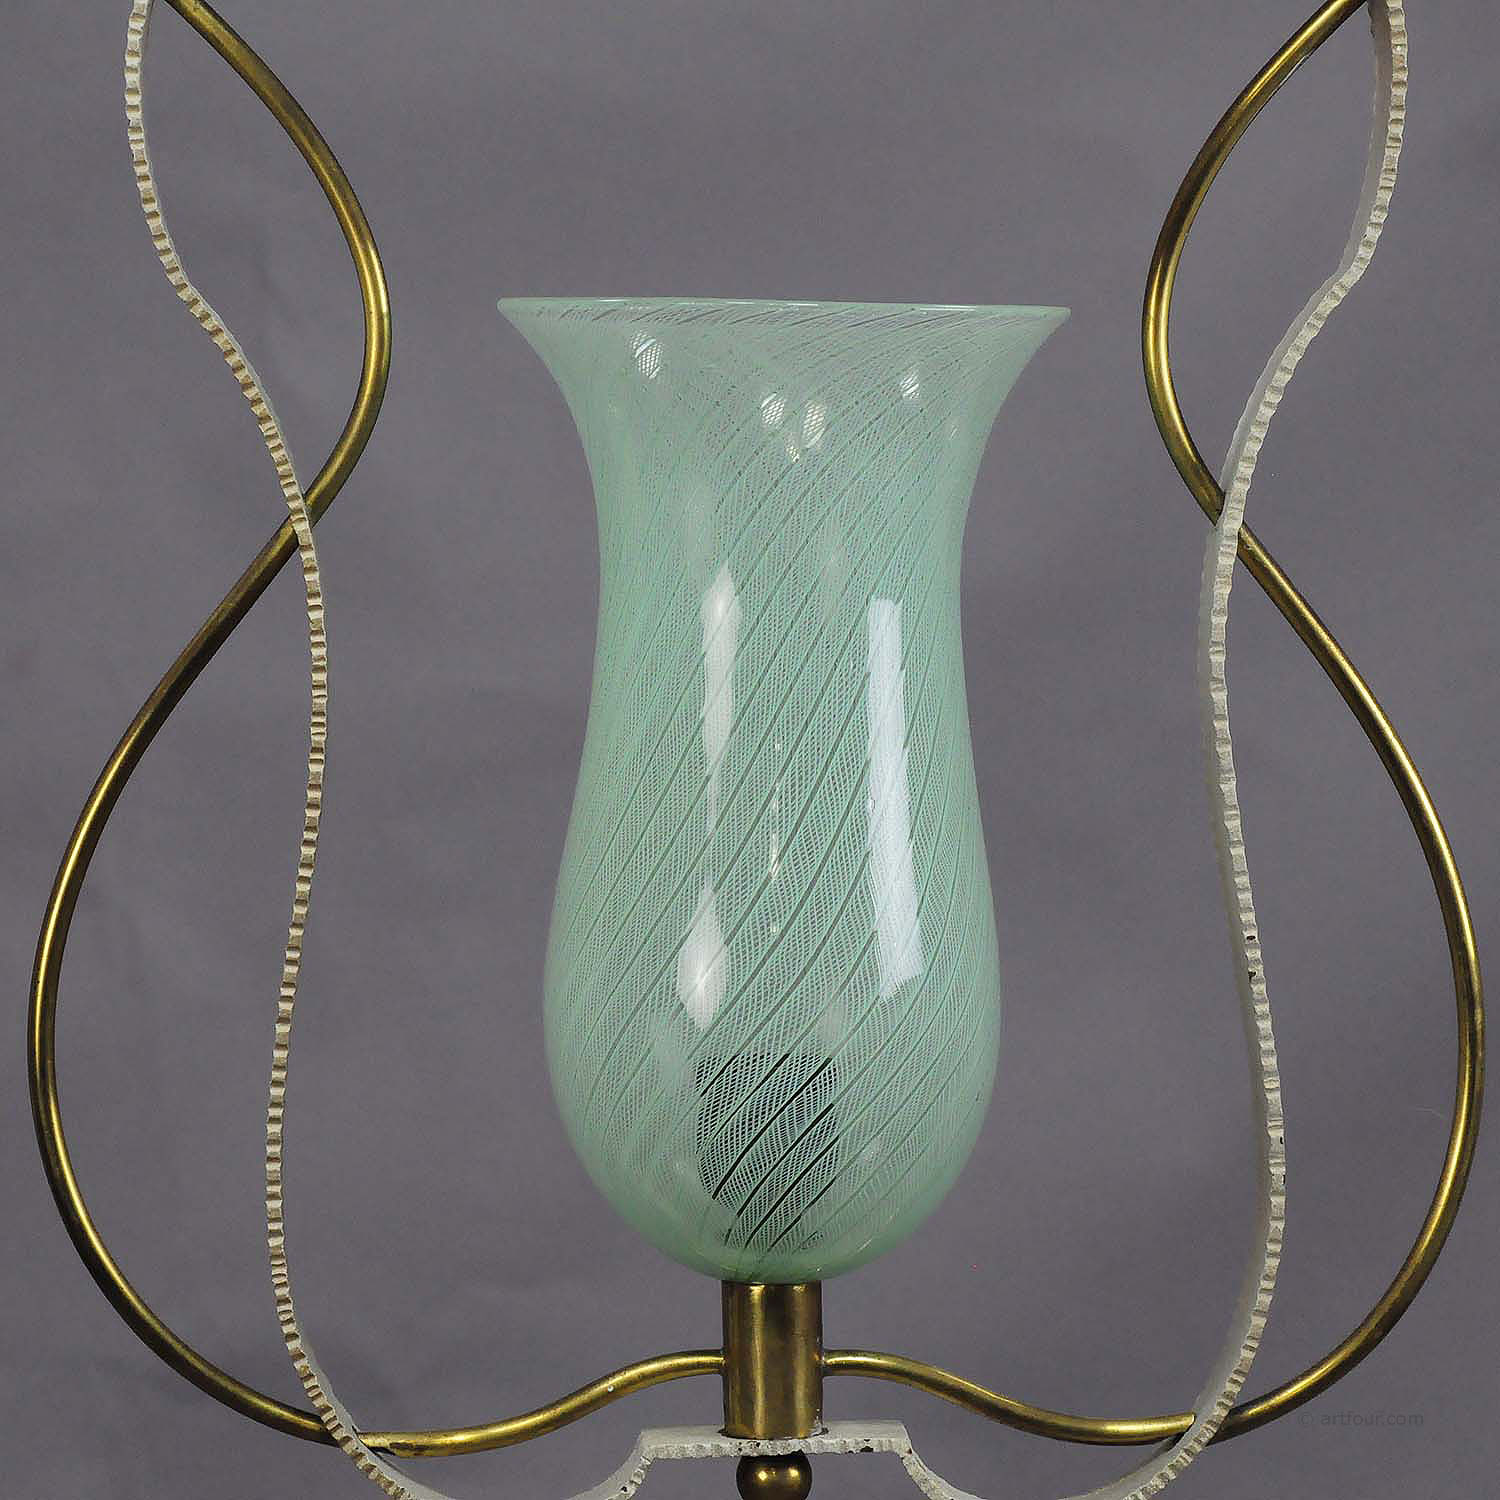 Rare Vintage Italian Brass and Murano Glass Pendant by Fontana Arte (attr.)